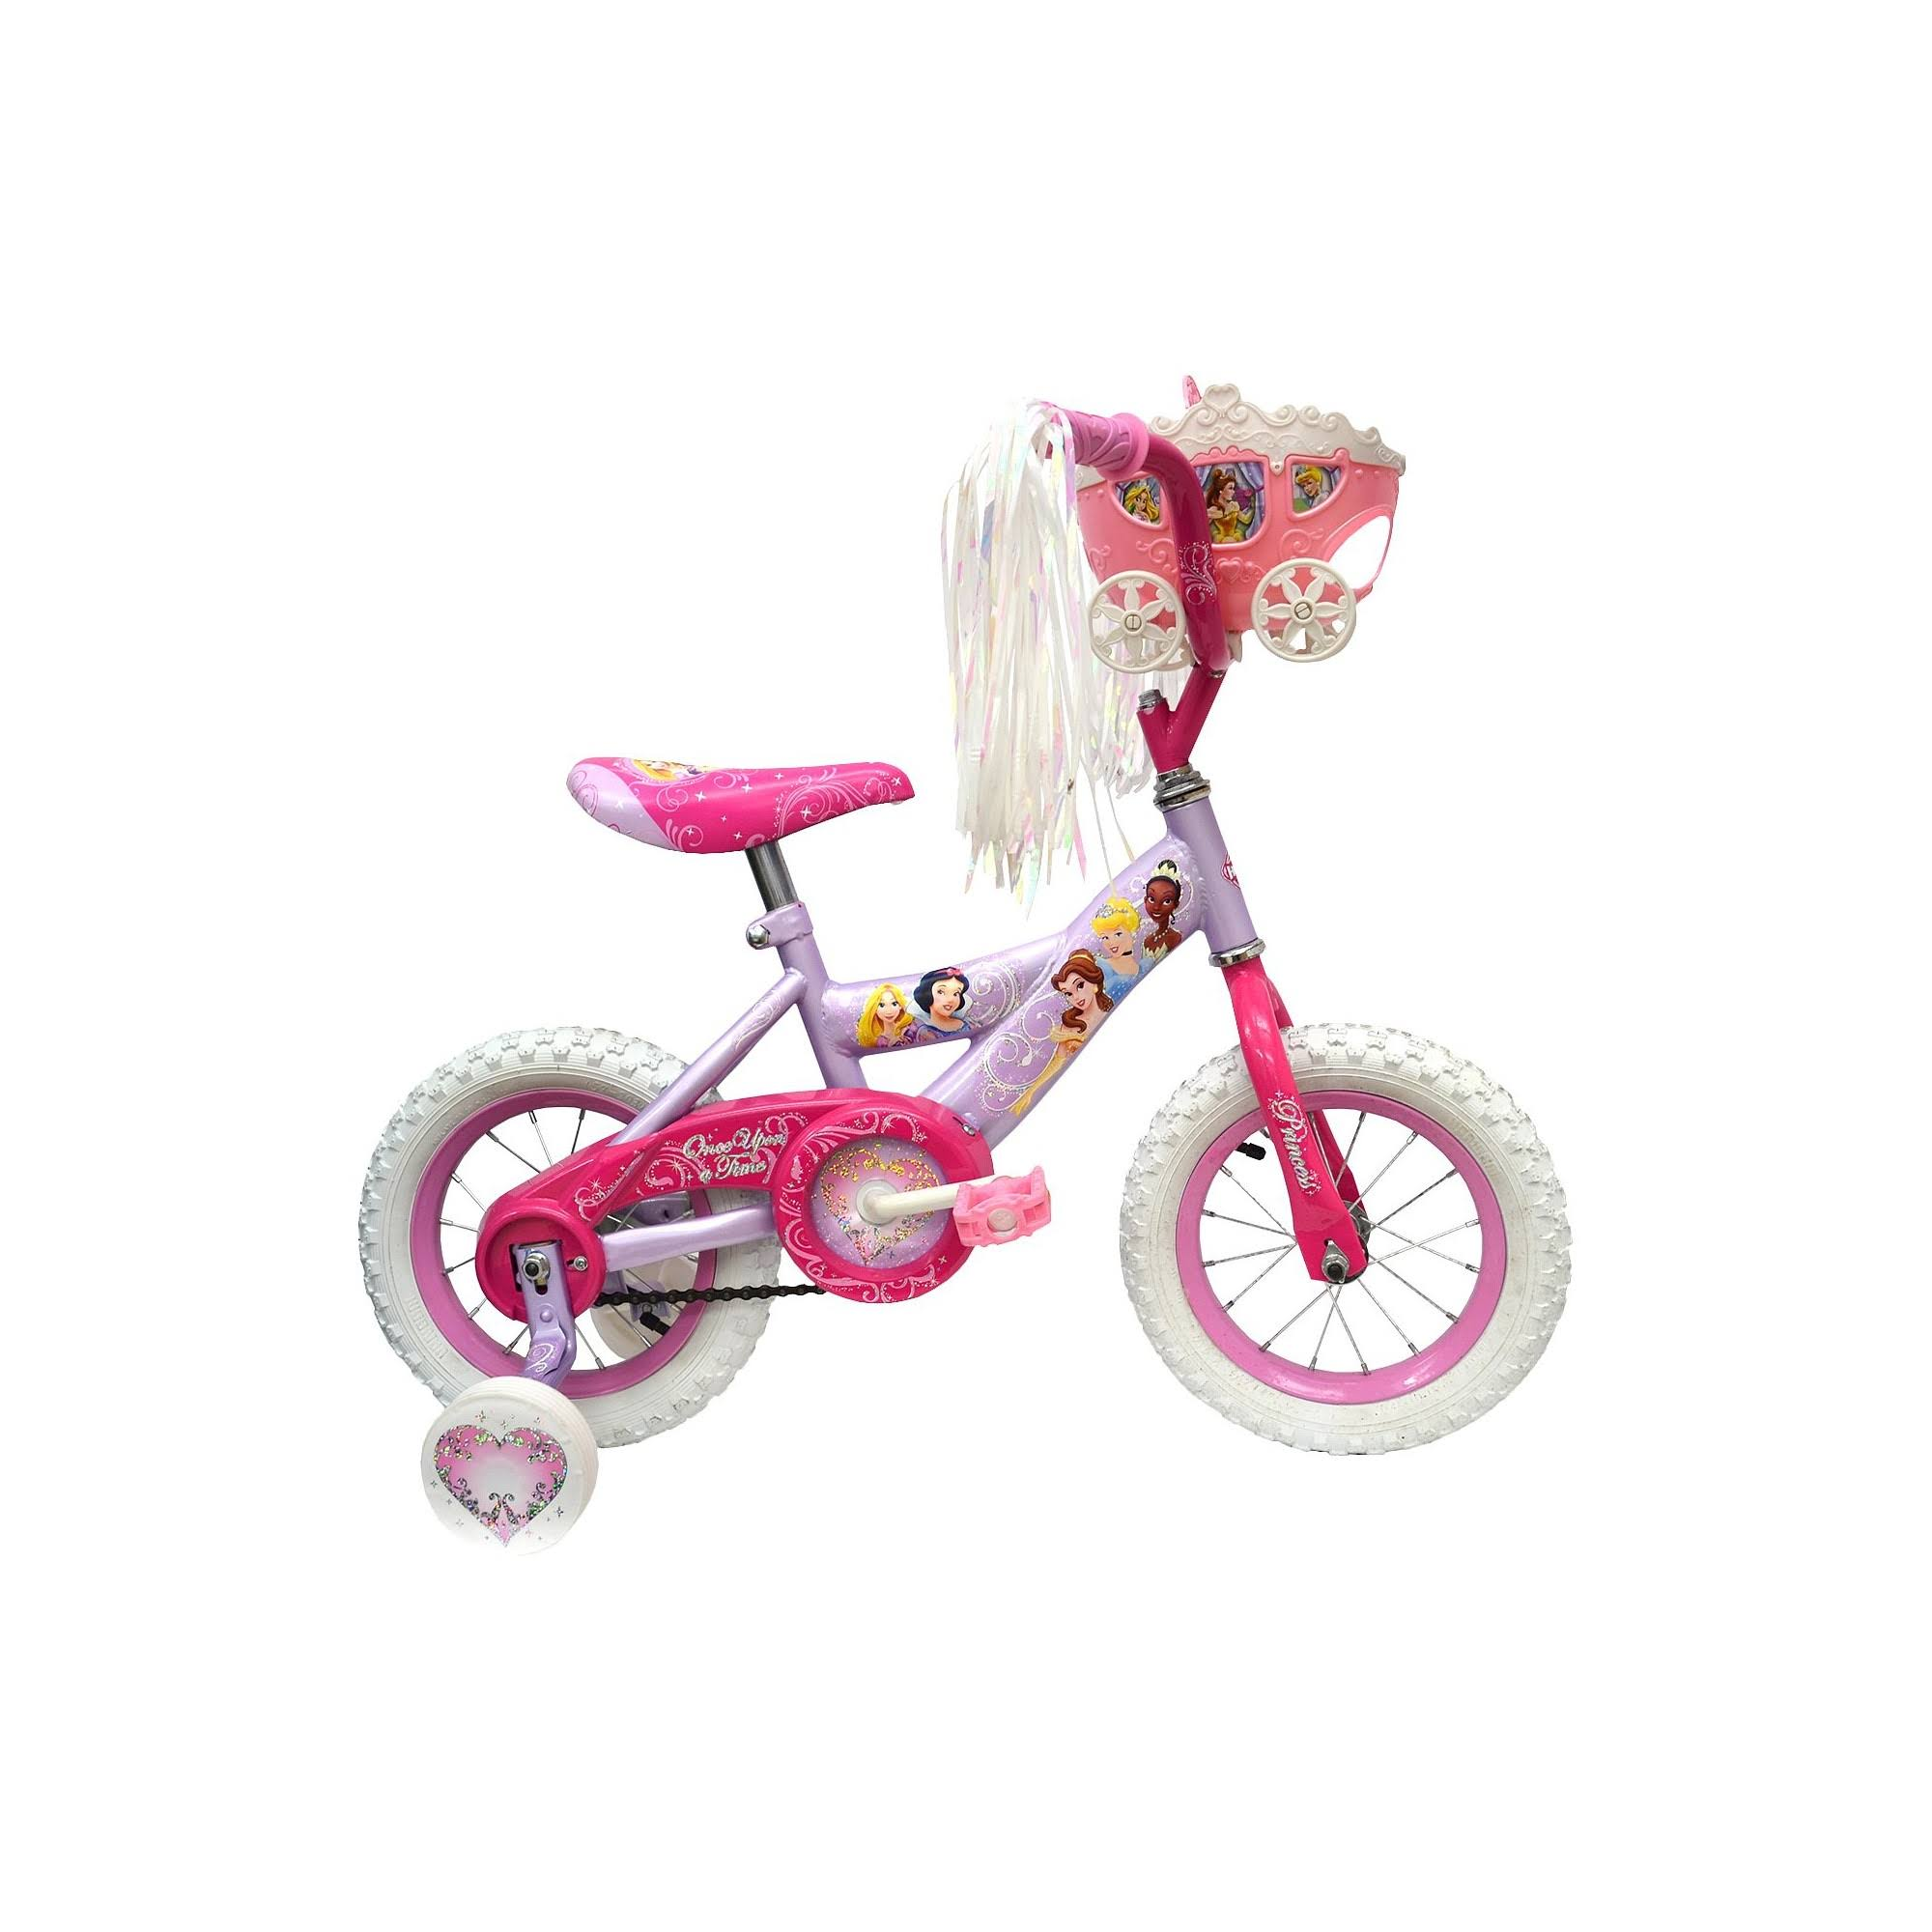 Huffy Girl’s Disney Princess Bike, Soft Pink/Pink, 12-Inch